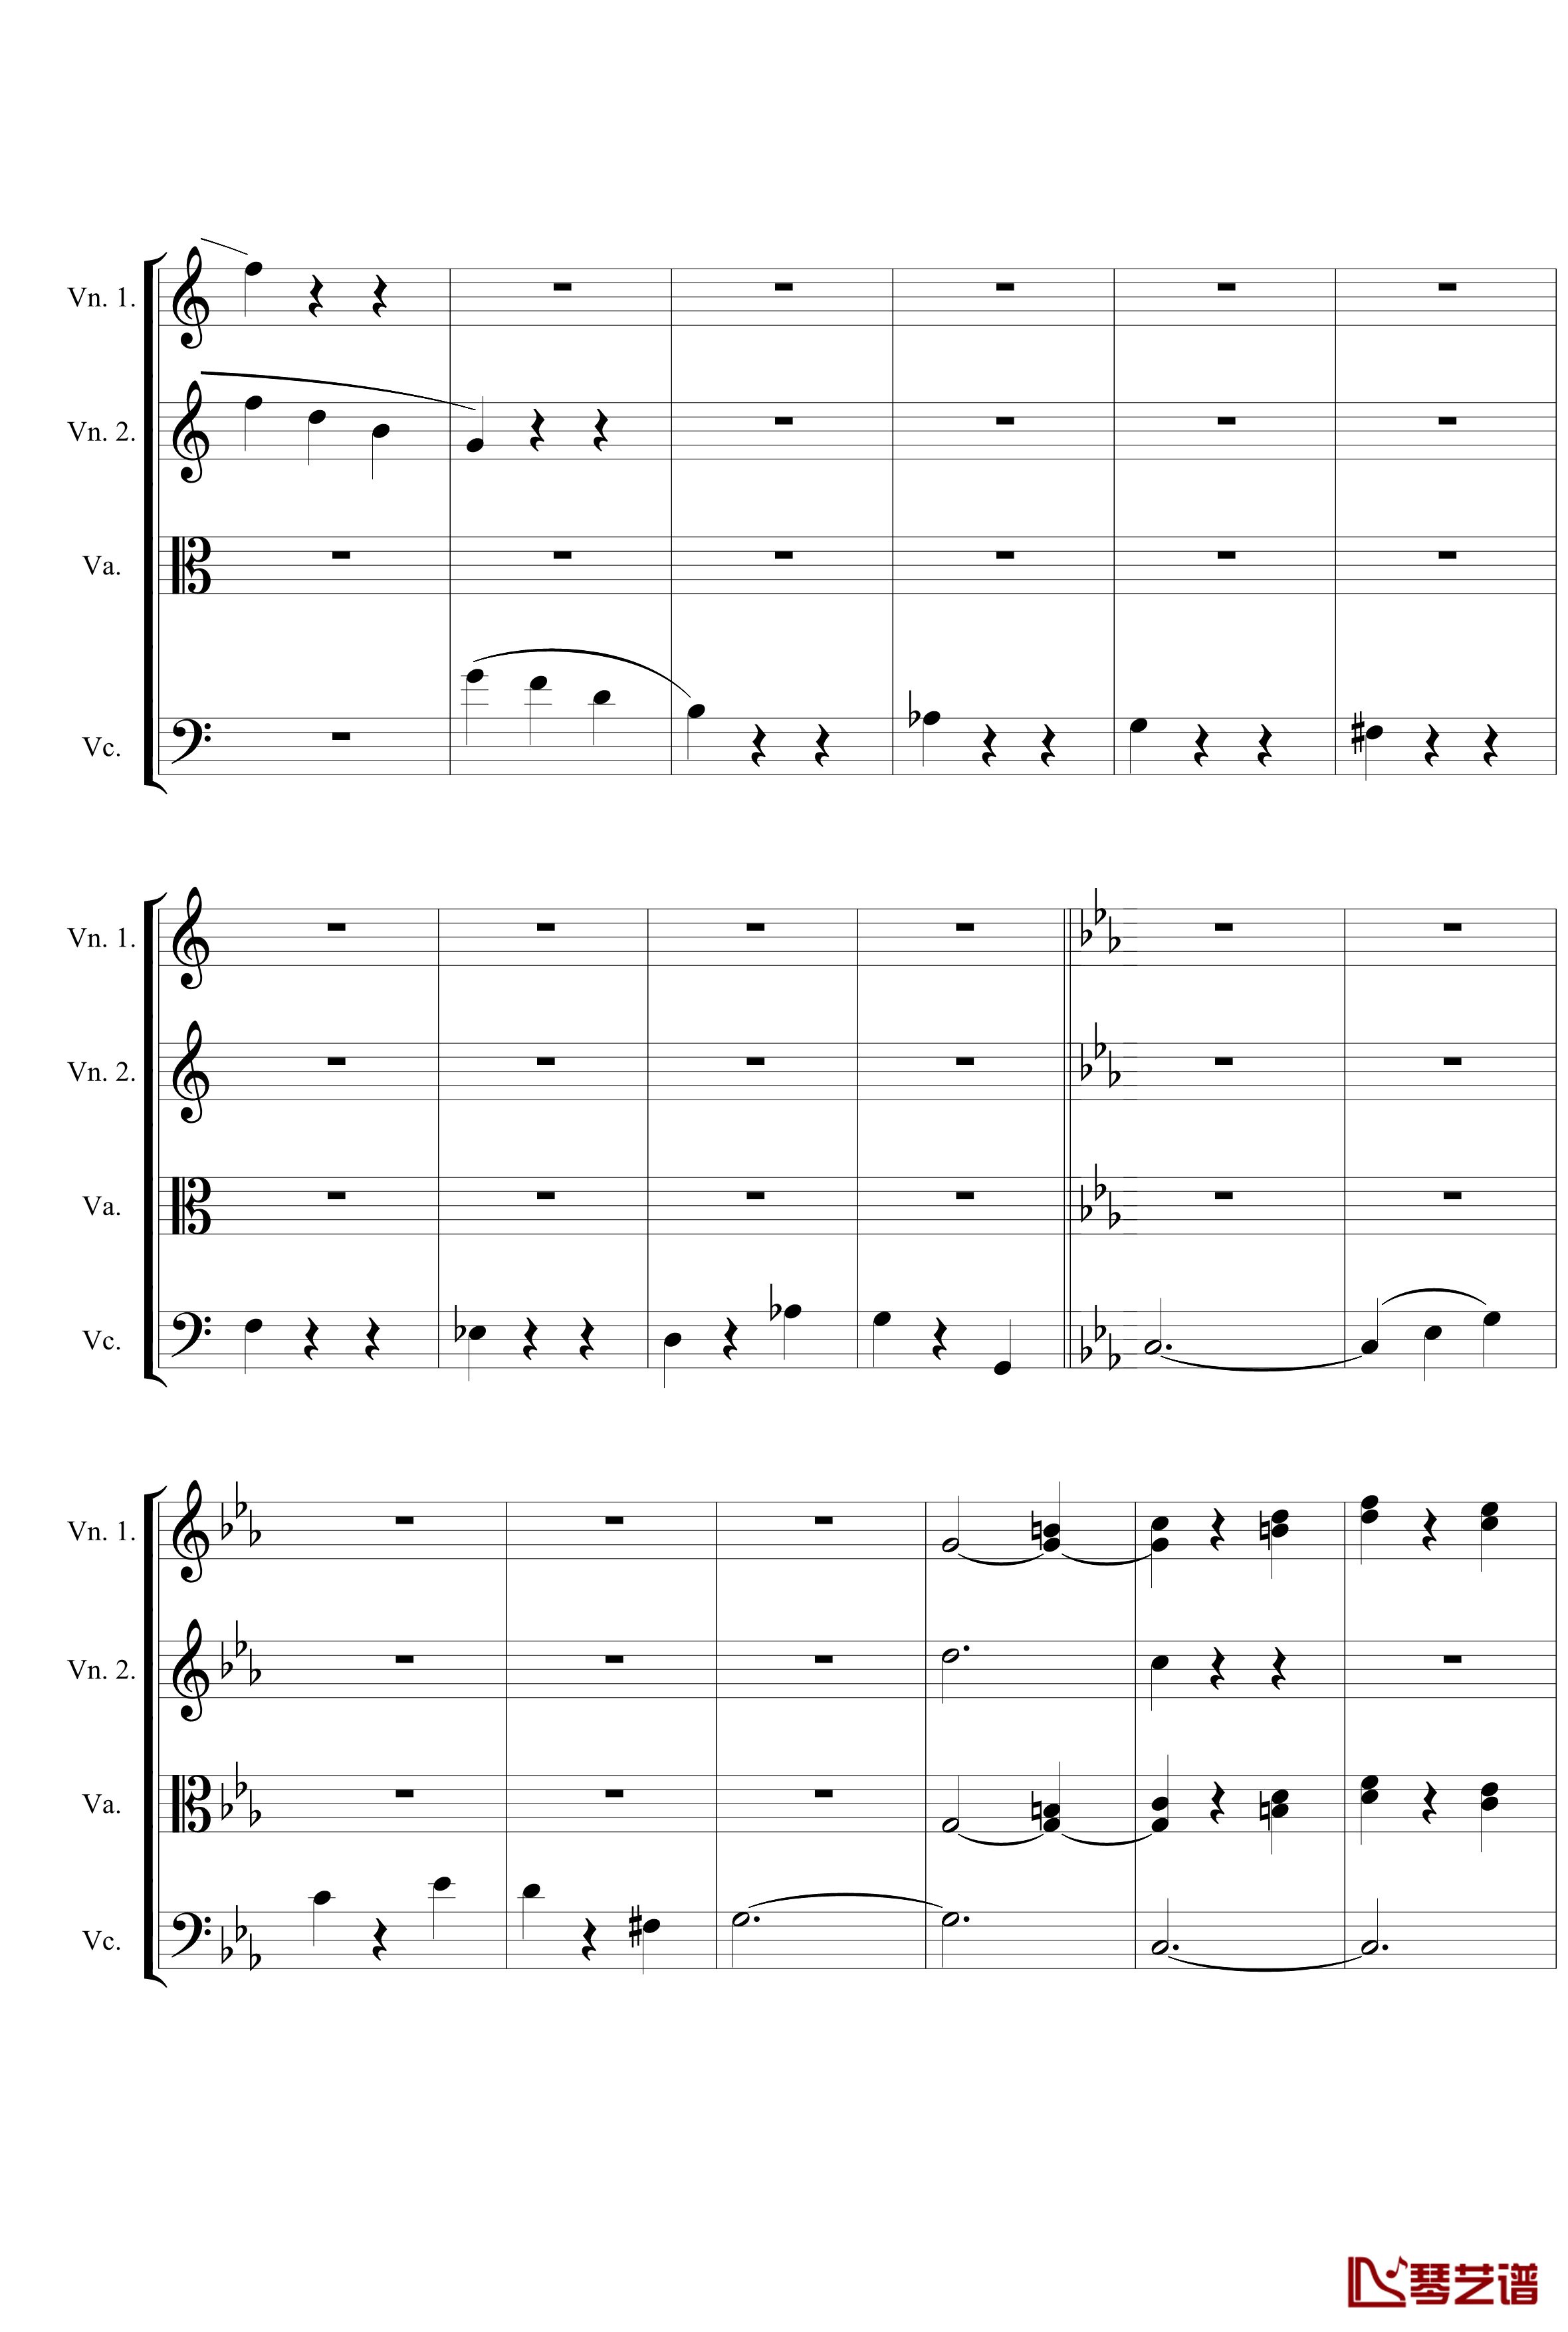 Symphony No.5 in C Minor 3rd钢琴谱-String quartet-贝多芬-beethoven16